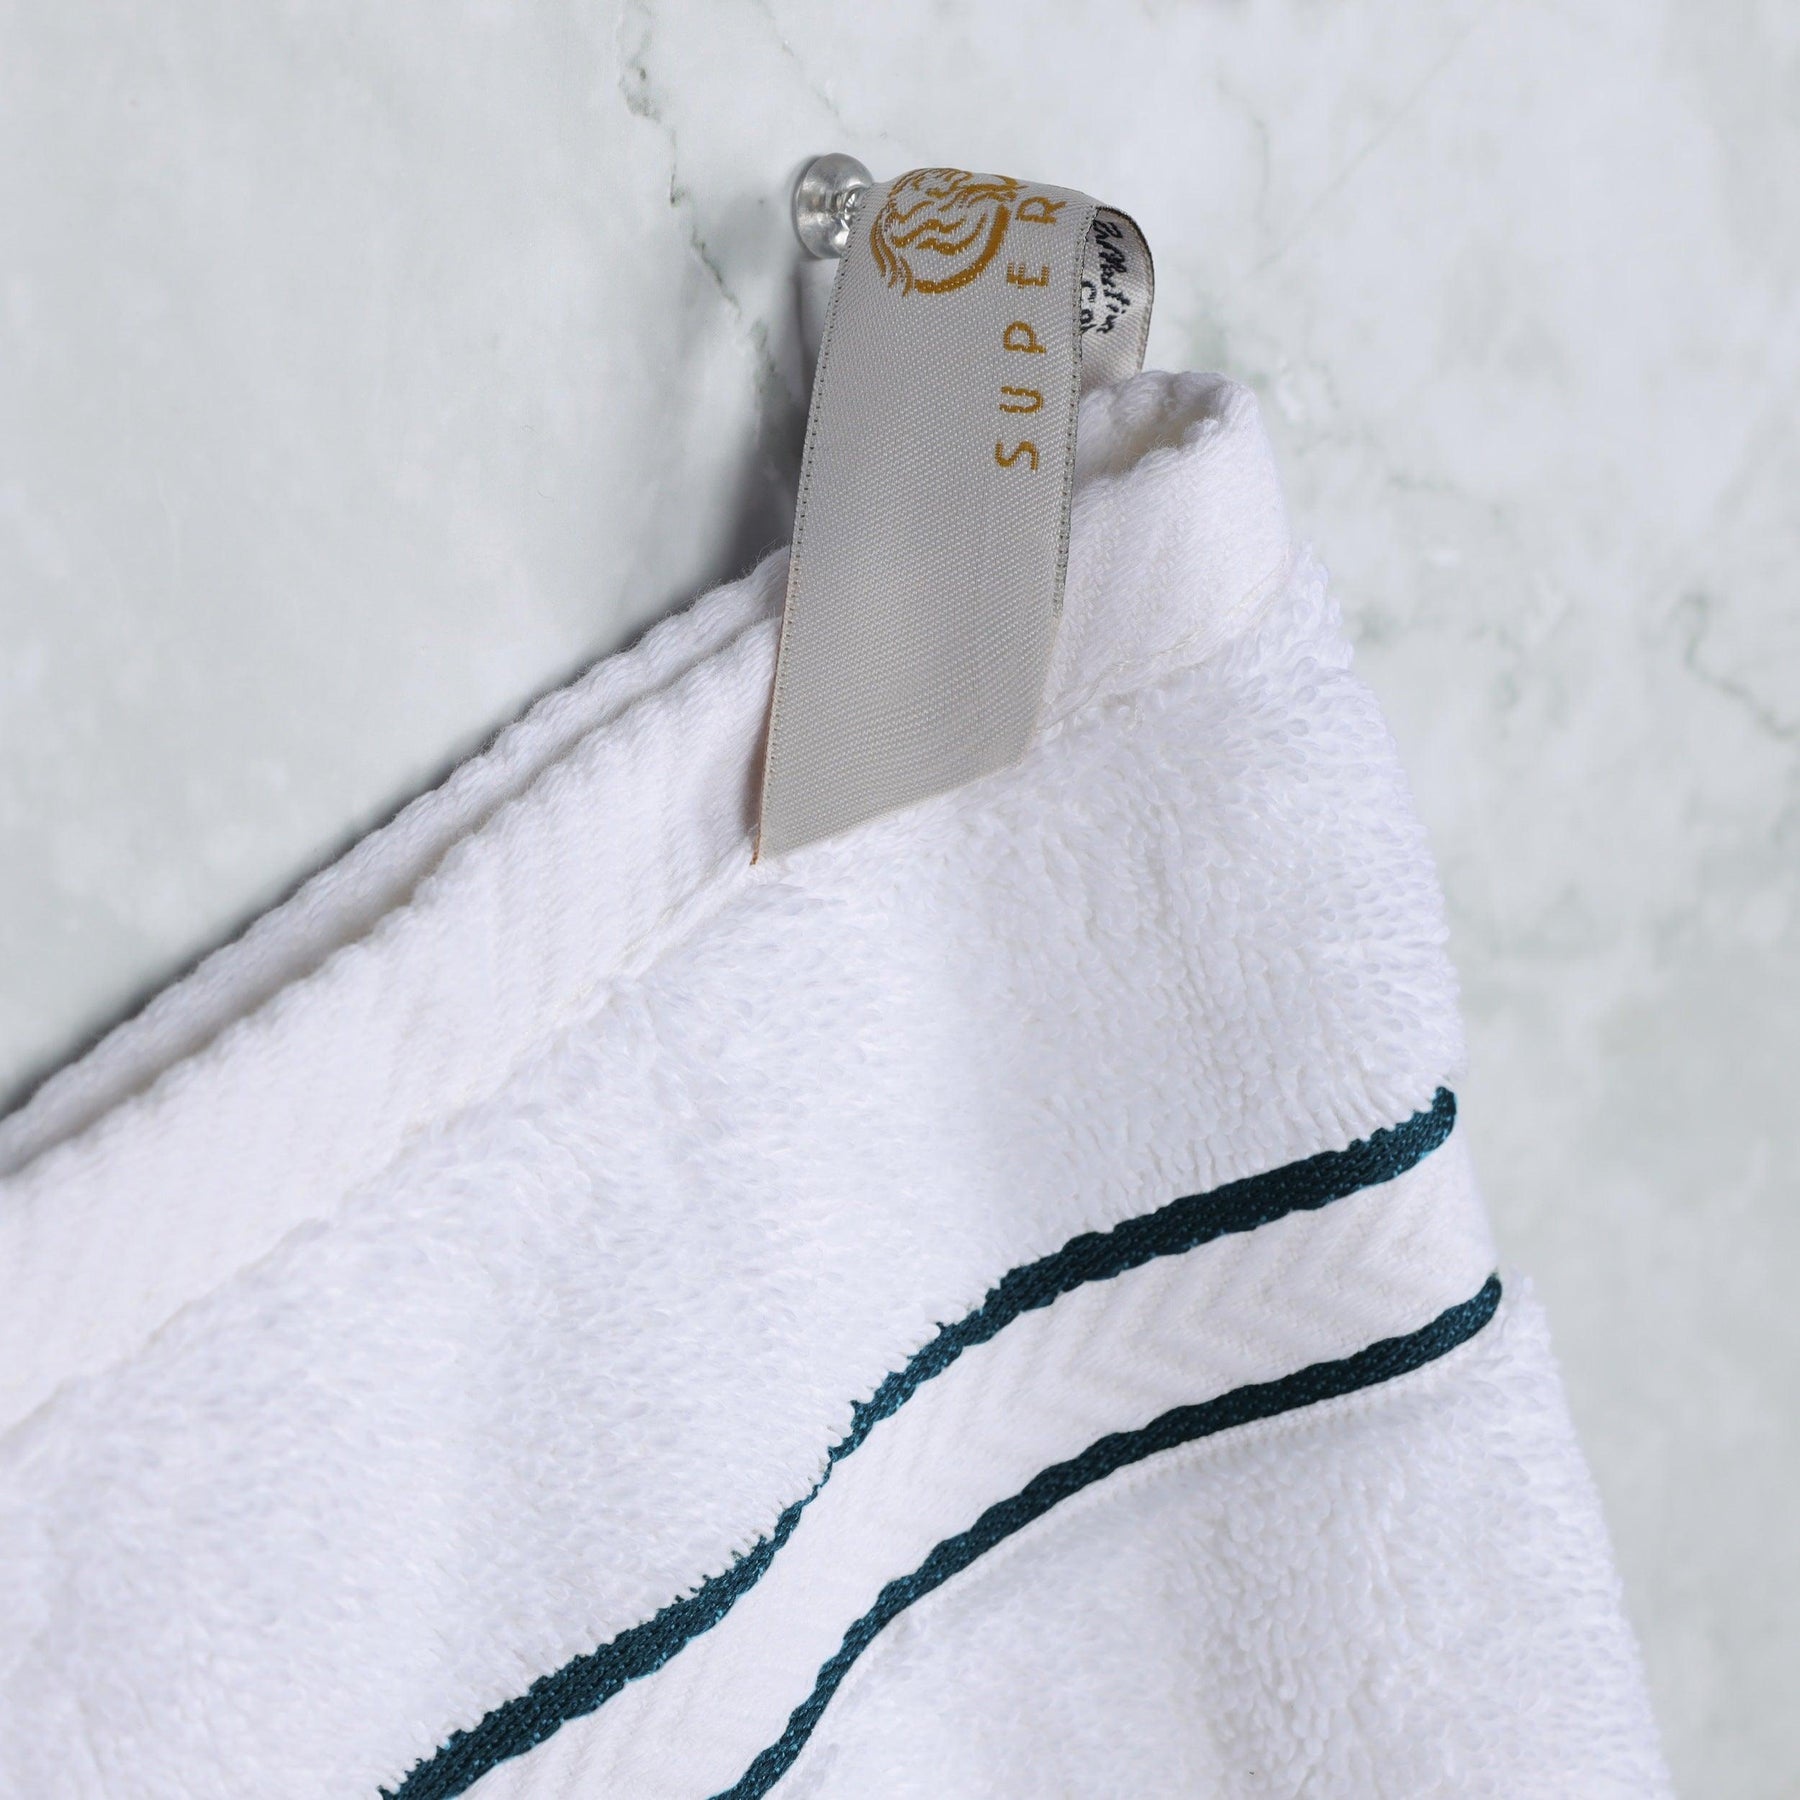 900 GSM Egyptian Cotton Towel Set Of 6, Plush & Absorbent Face